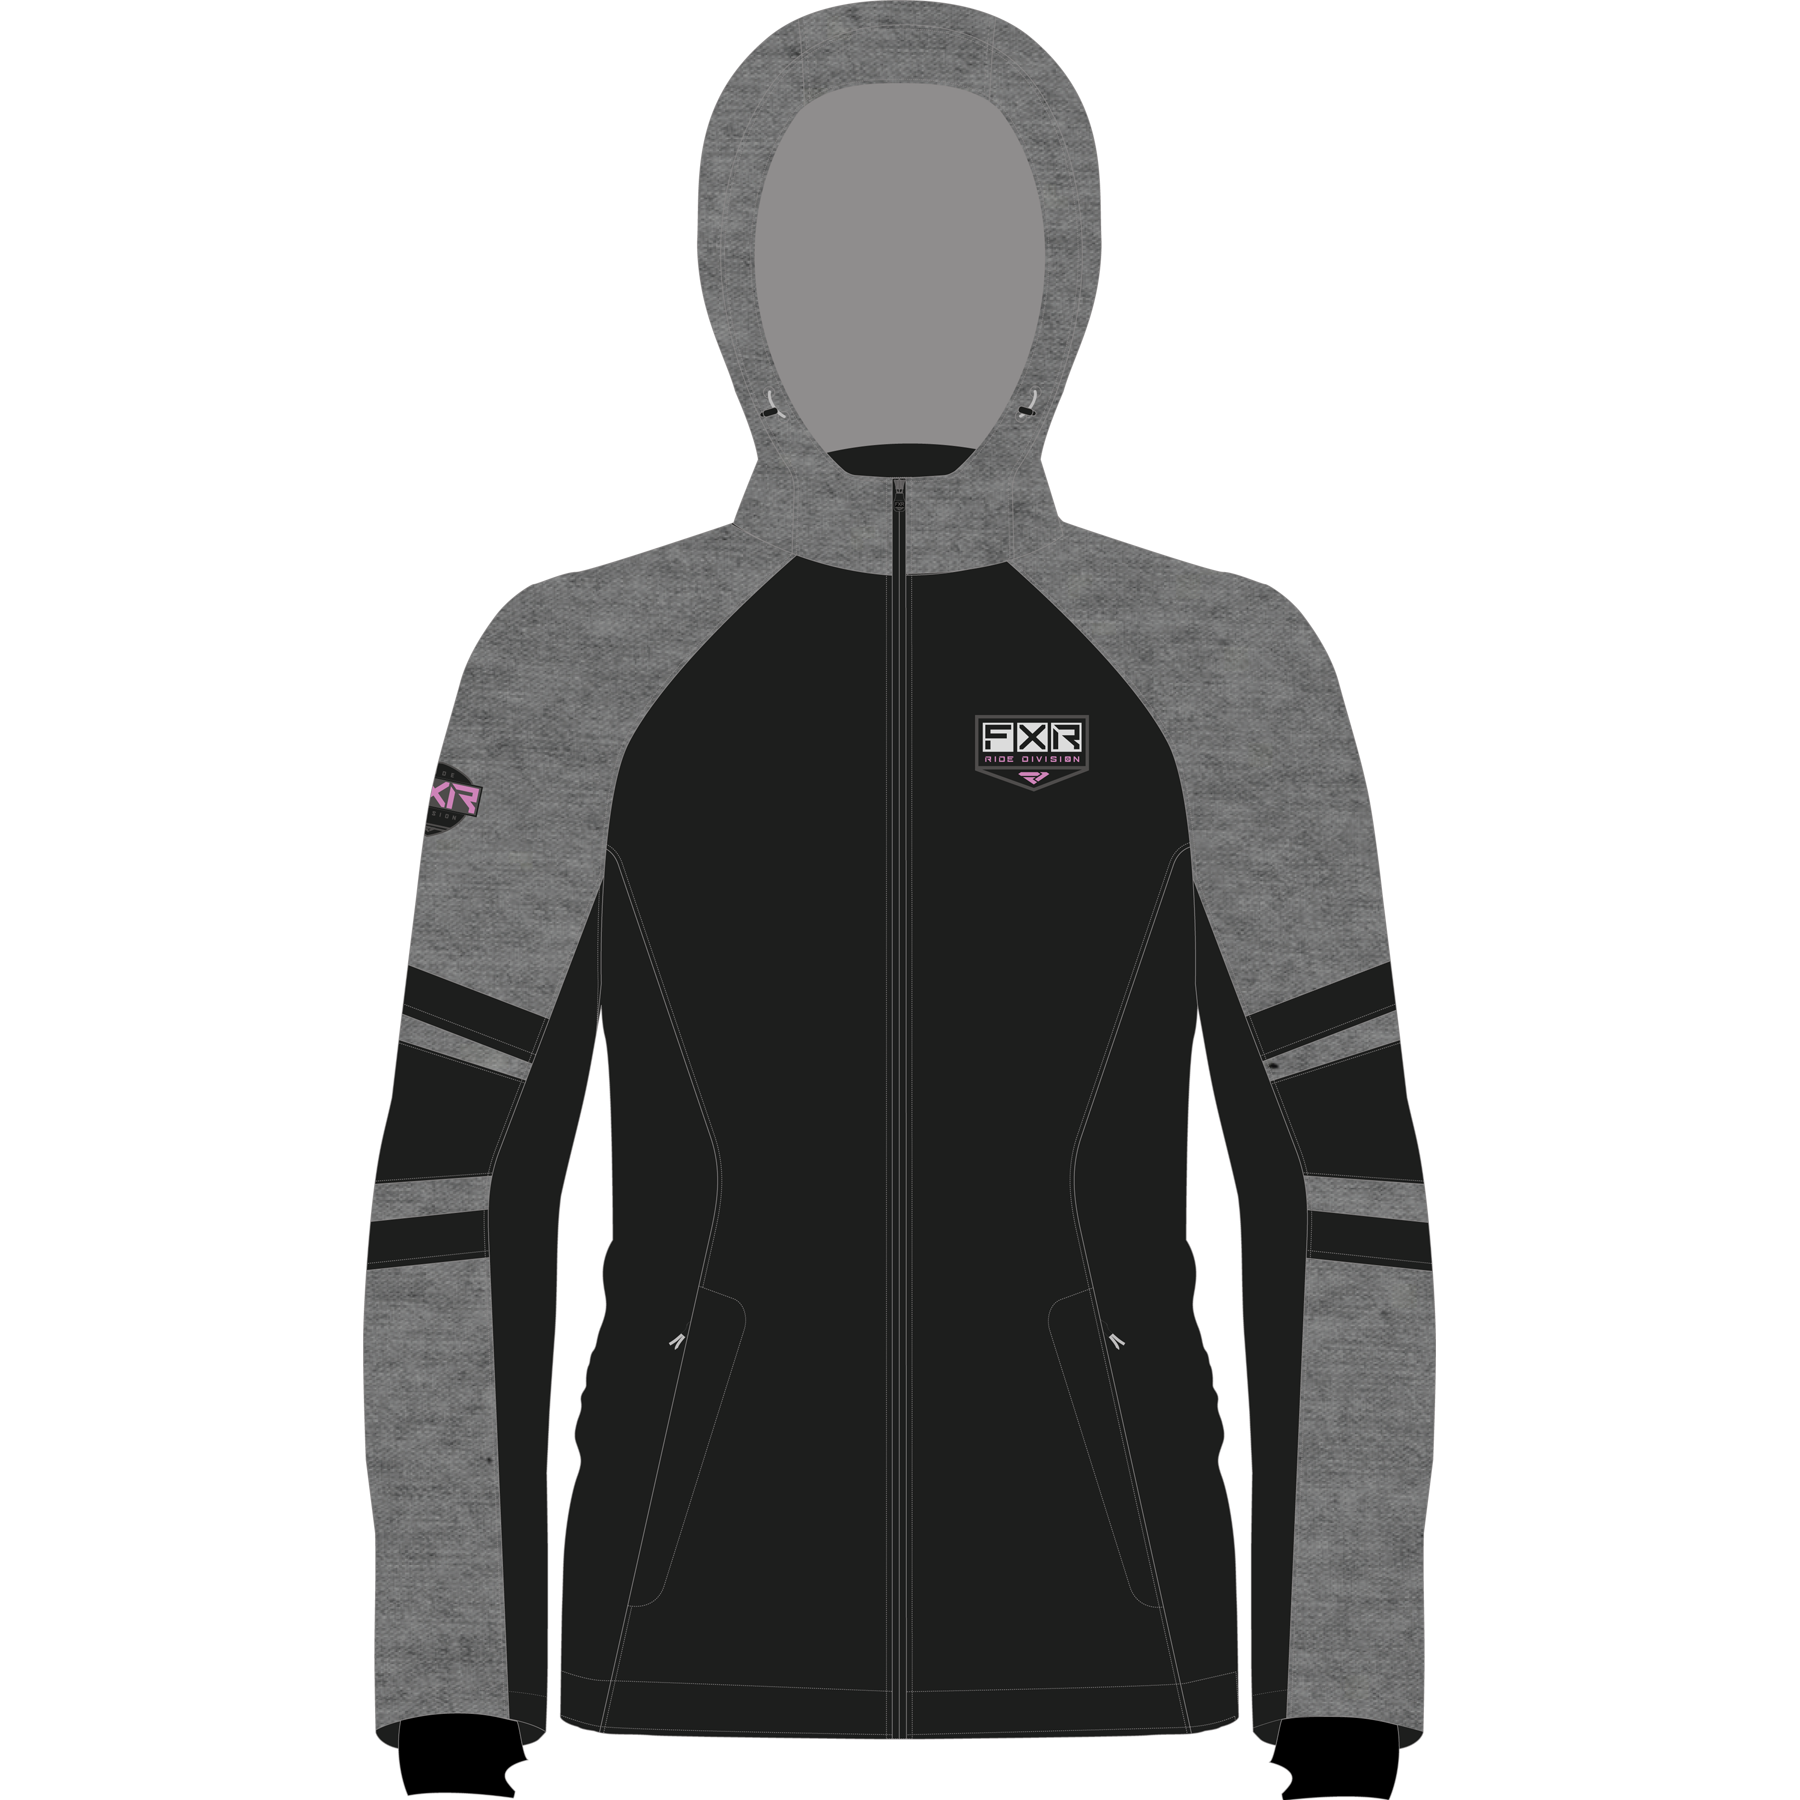 fxr racing jackets  maverick softshell jackets - casual